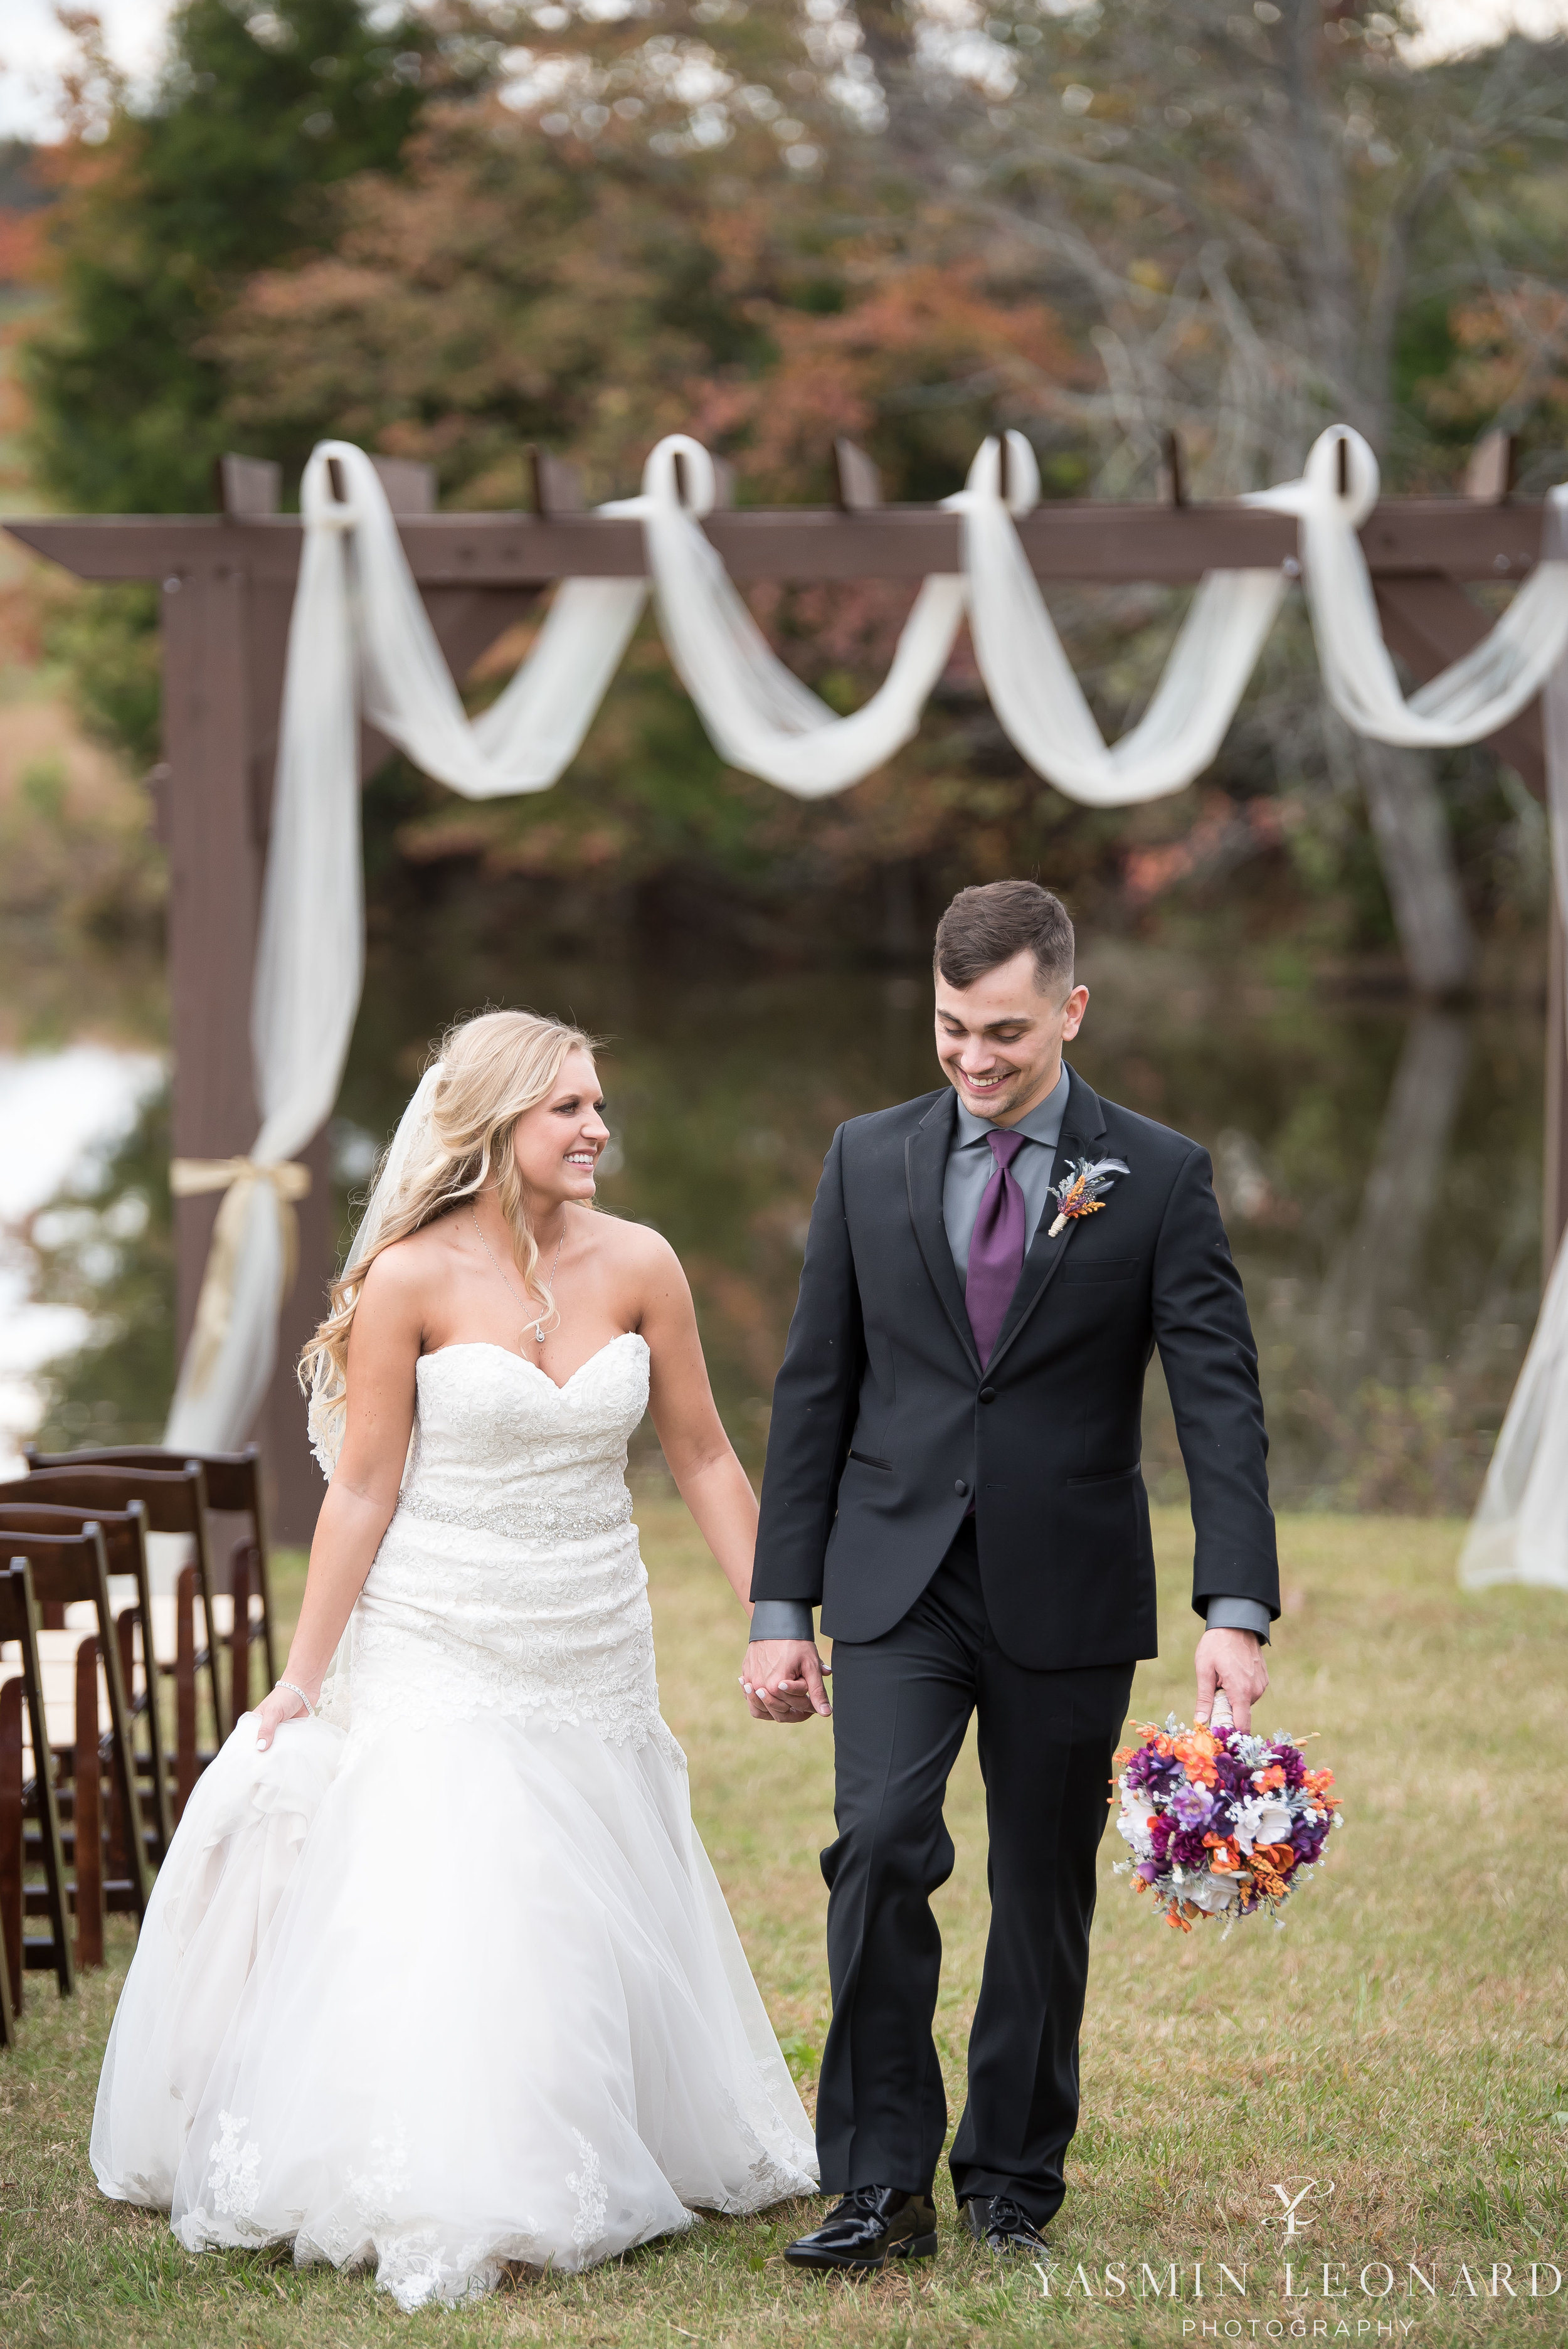 NC Wedding Photographer - Yasmin Leonard Photography - Summerfield Farms - High Point Wedding Photographer - Labri at Linwood - Barns in North Carolina - NC Barn Wedding-46.jpg